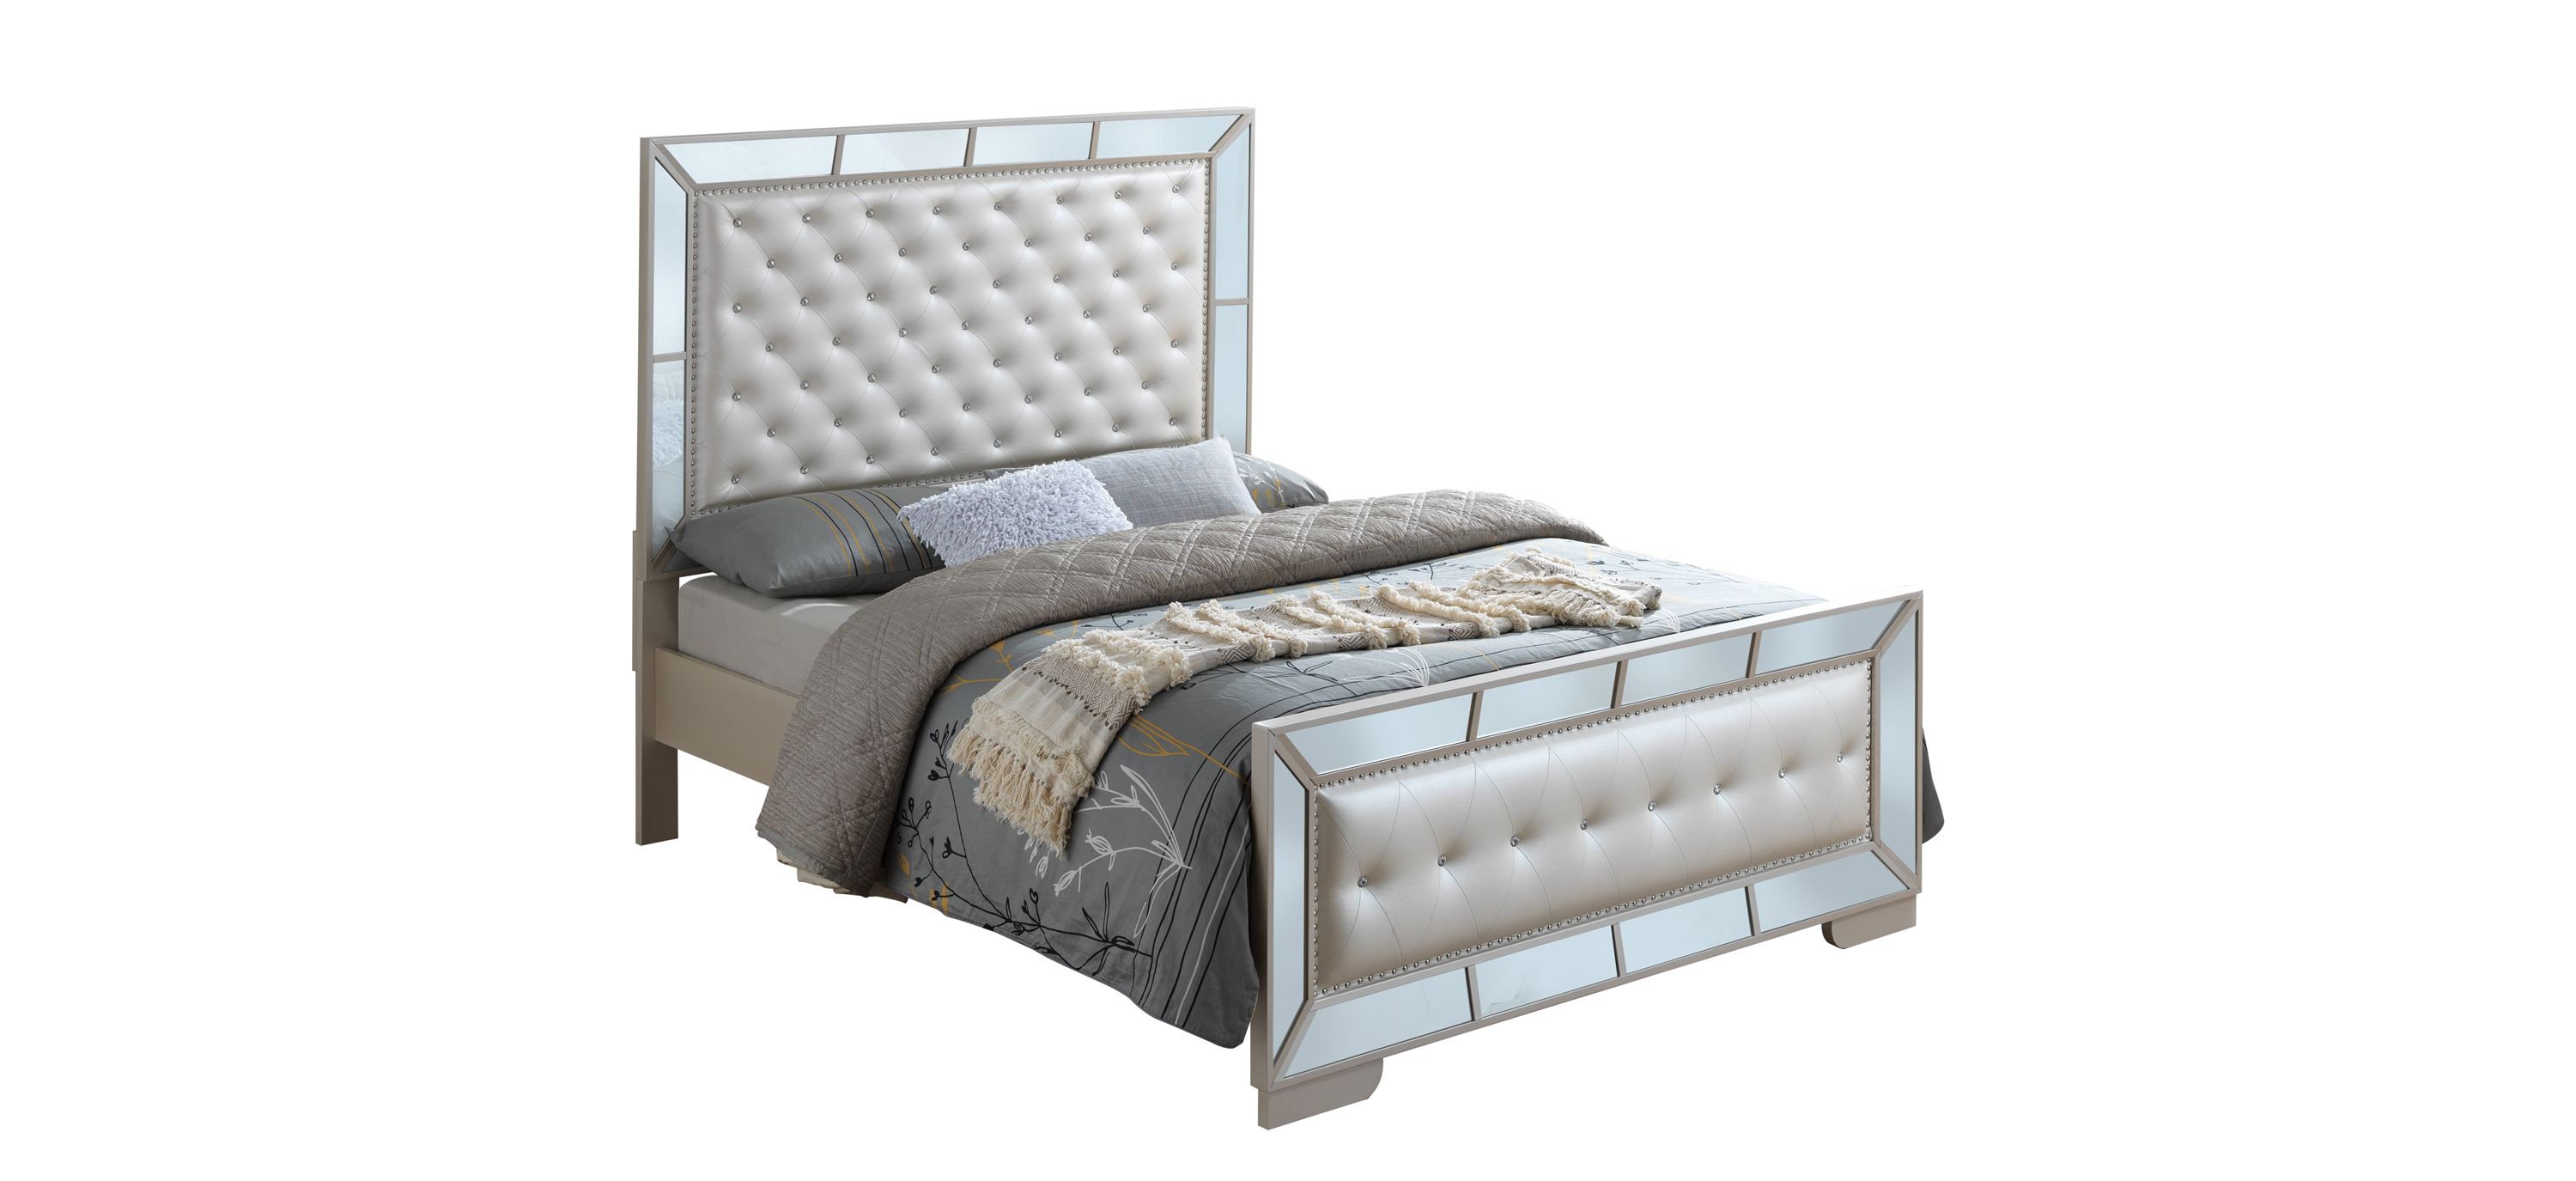 Hollywood Hills Upholstered Bed